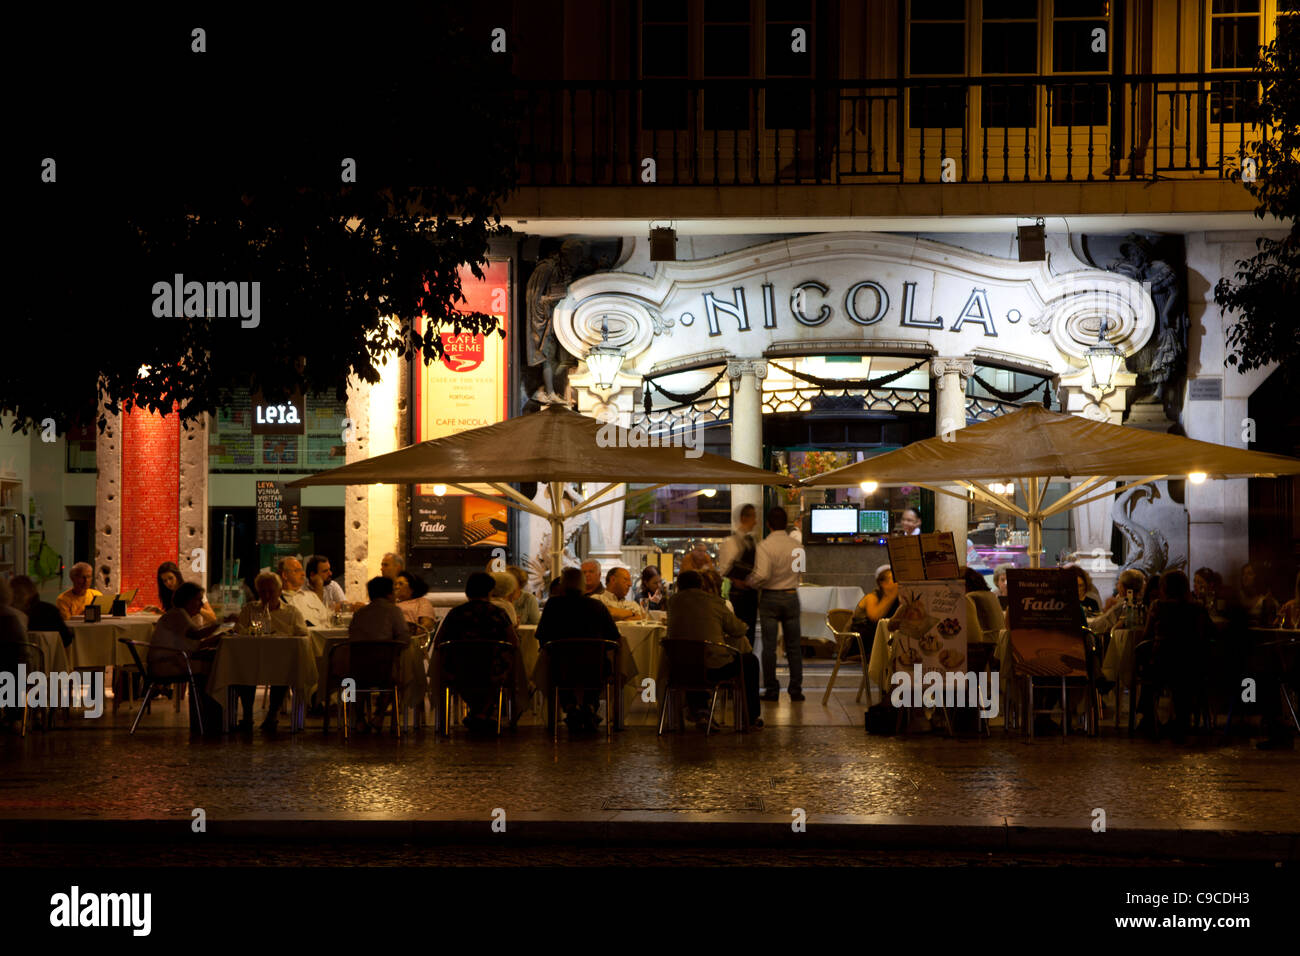 Cafe Nicola Baixa Cafe, historic cafe facing onto Rossio Square  Lisbon Portugal, Europe Stock Photo